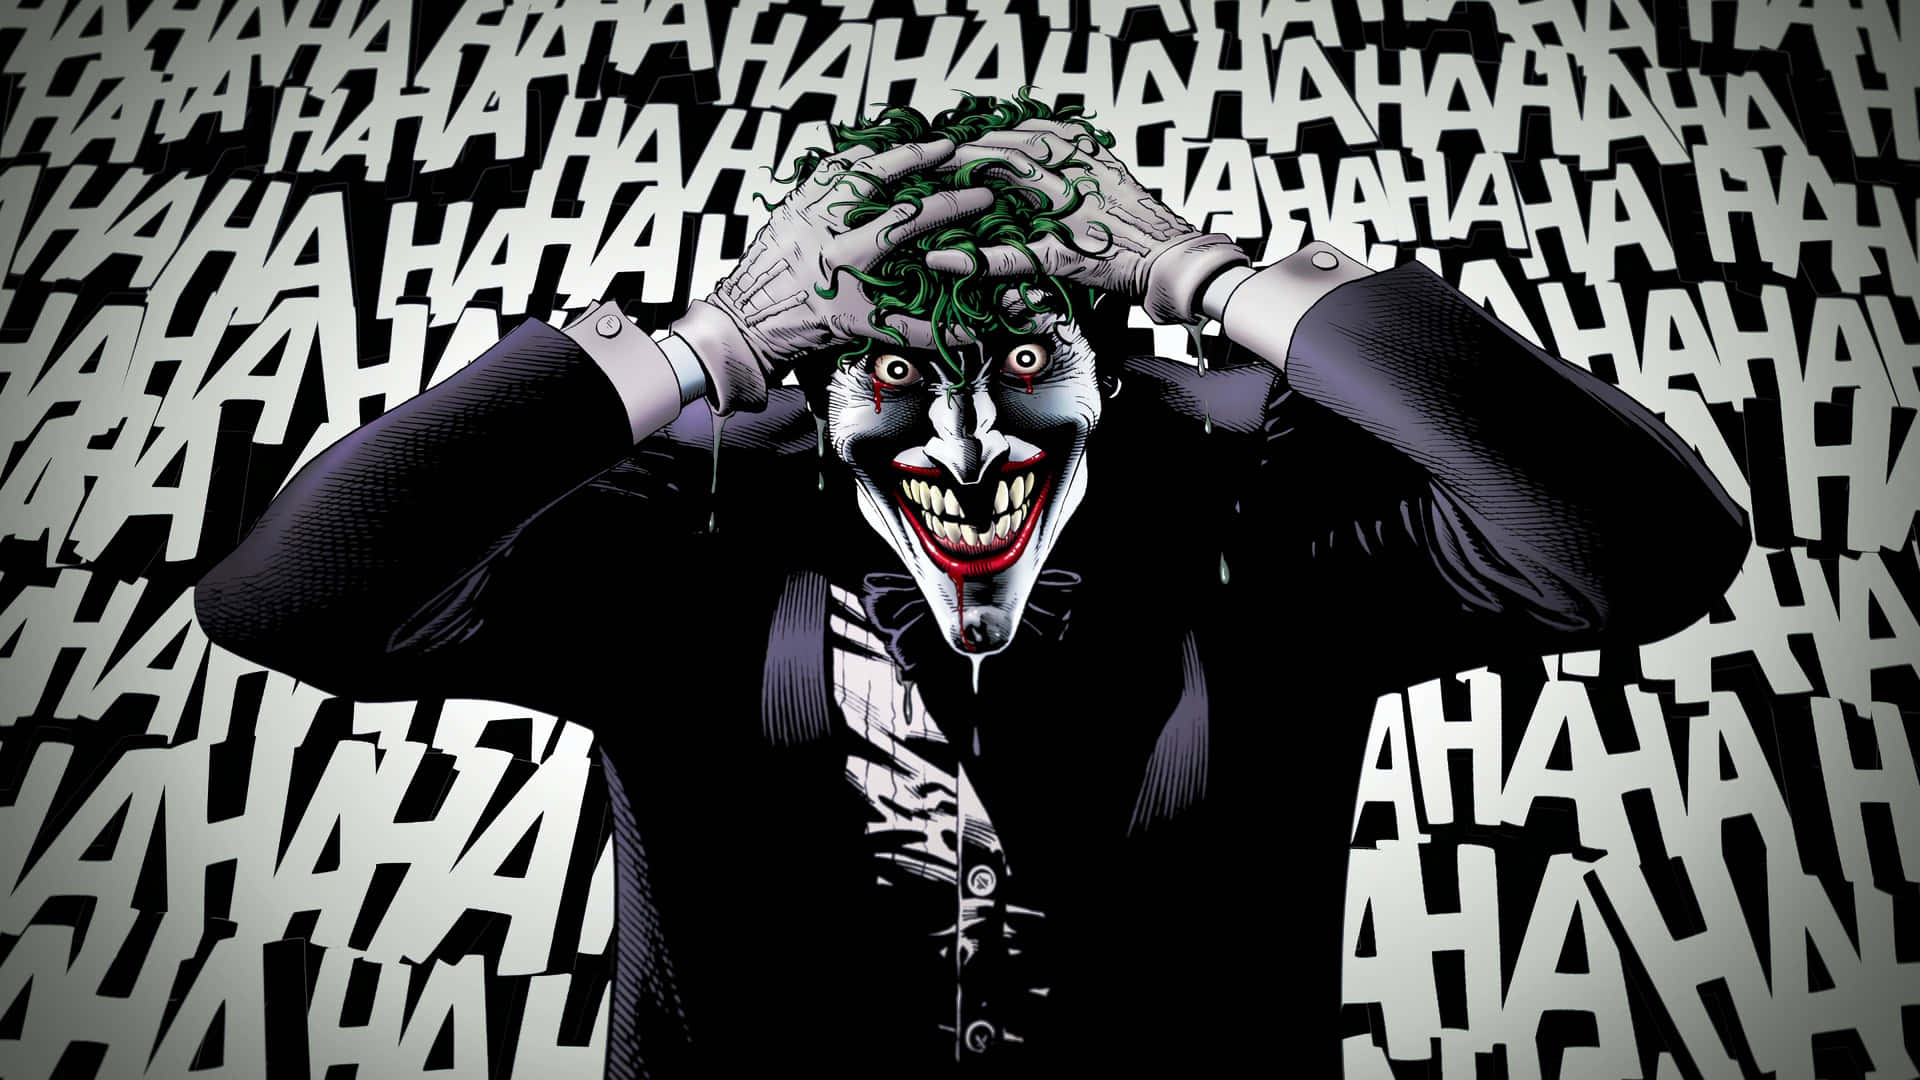 Jokerhintergrundbild In Hd.